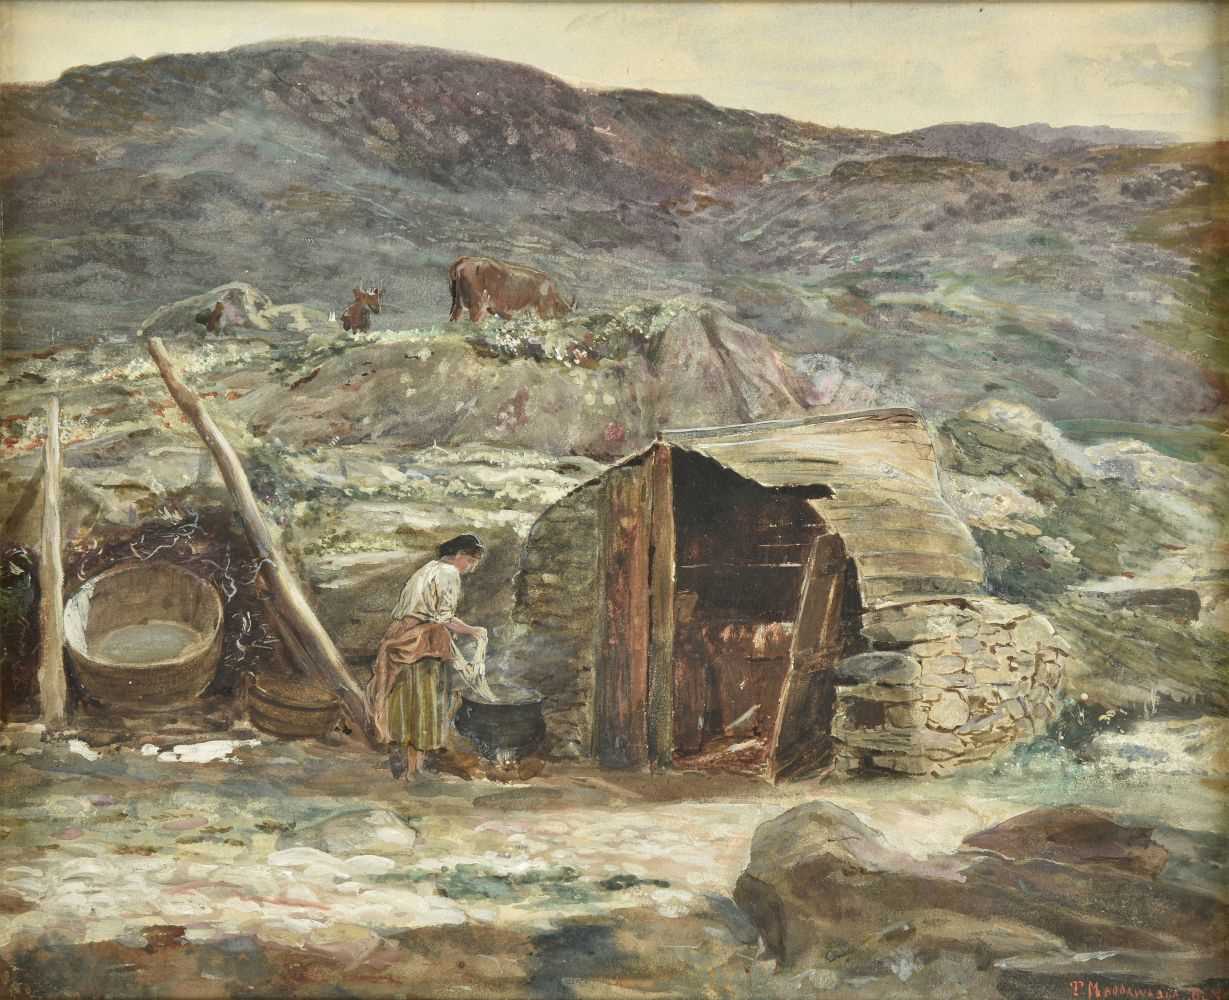 Lot 306 - Hemy (Thomas M. Madawaska, 1852-1937). The Fisherman's Hut, 1875